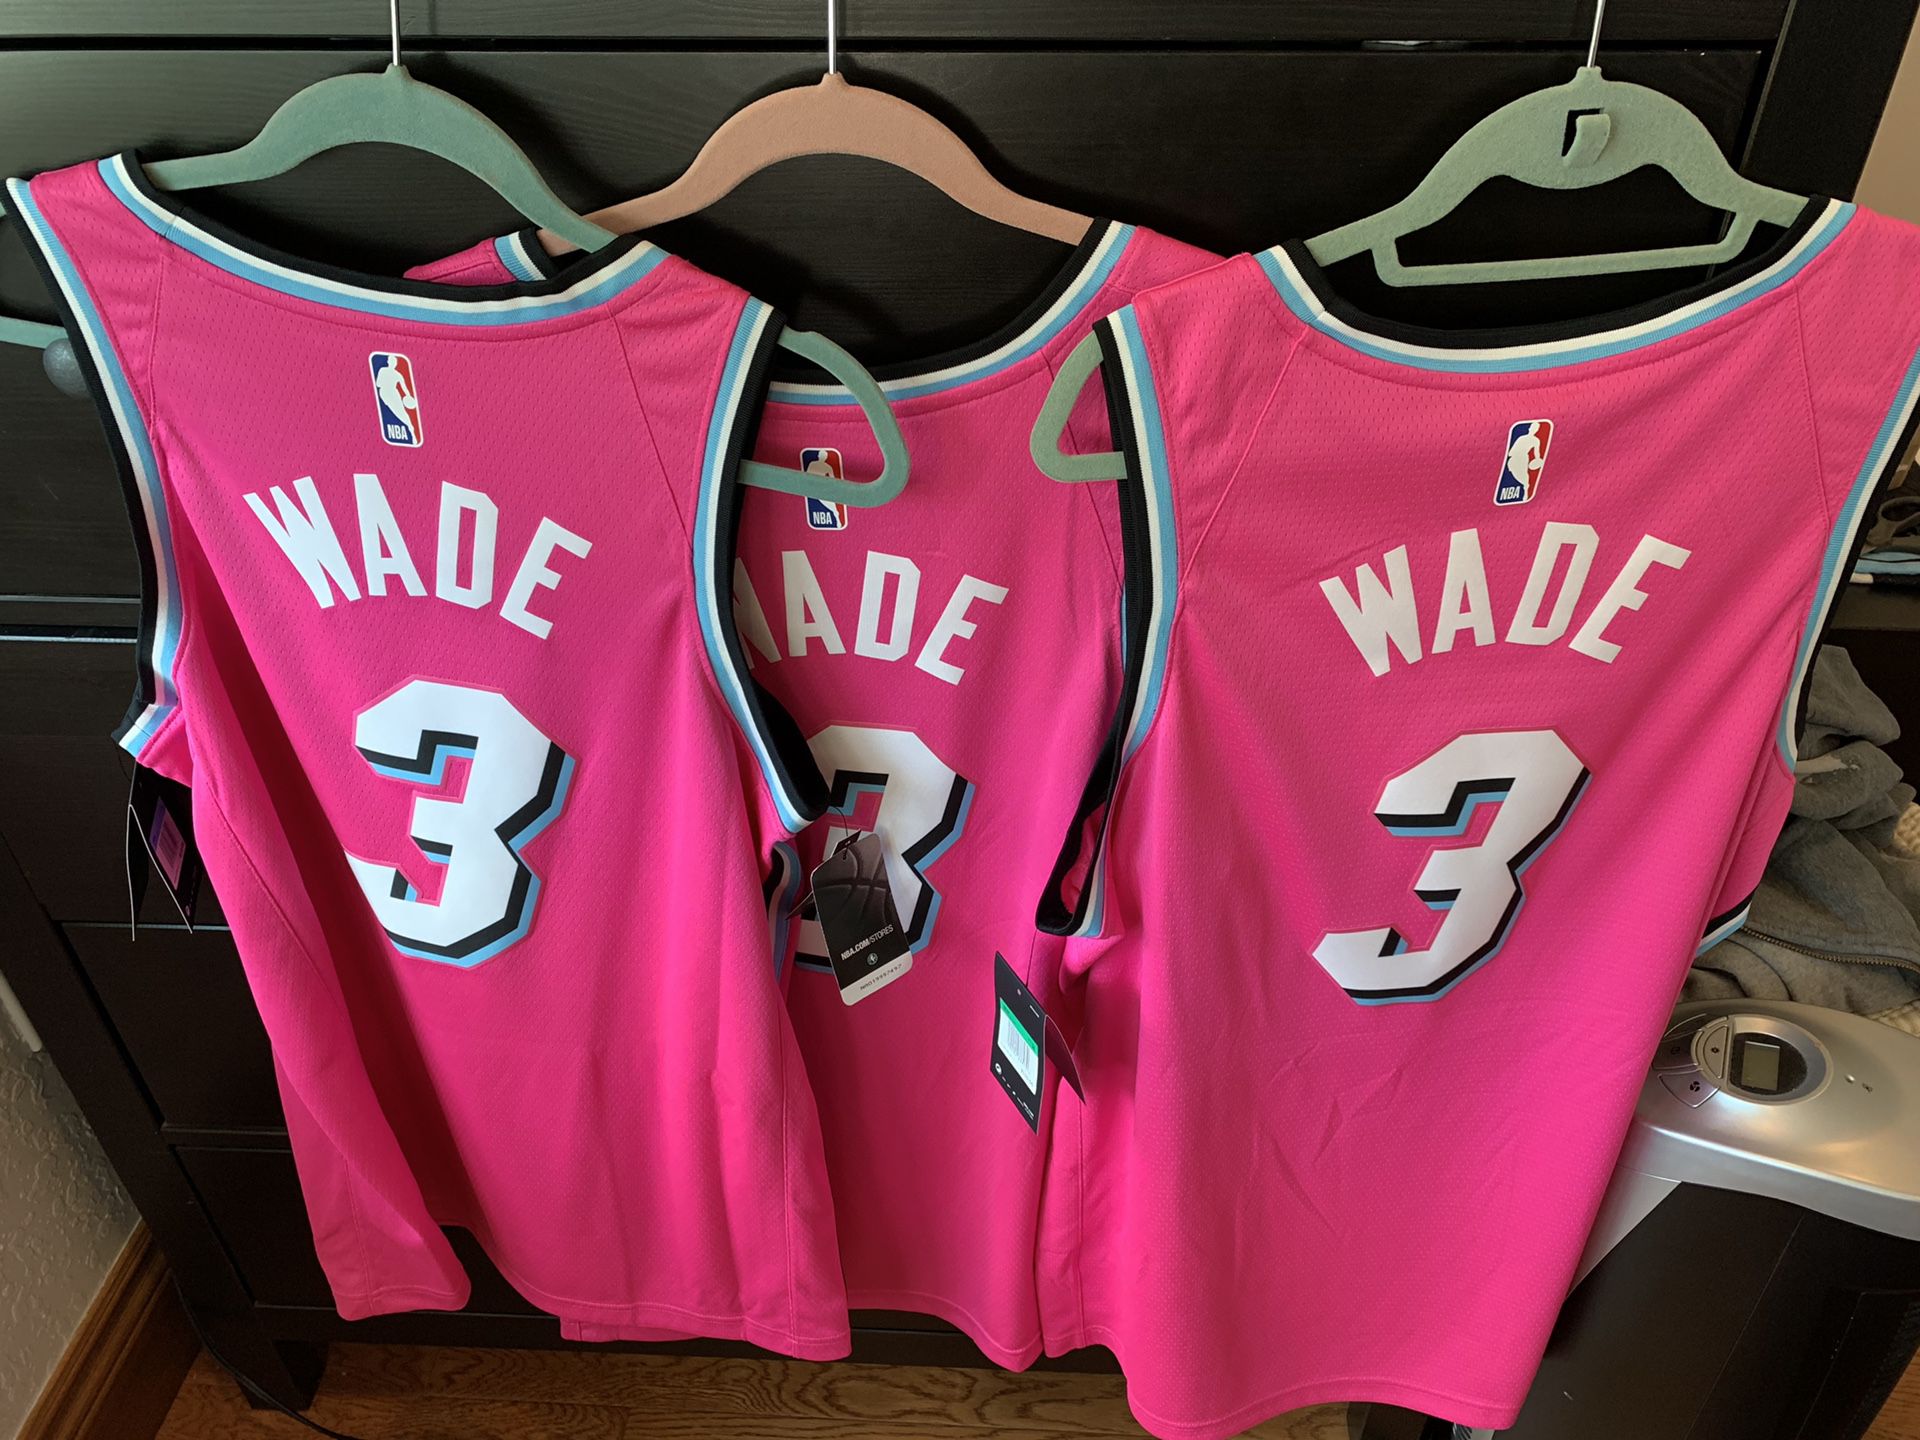 Miami Heat Unveils Pink Sunset Vice Jerseys